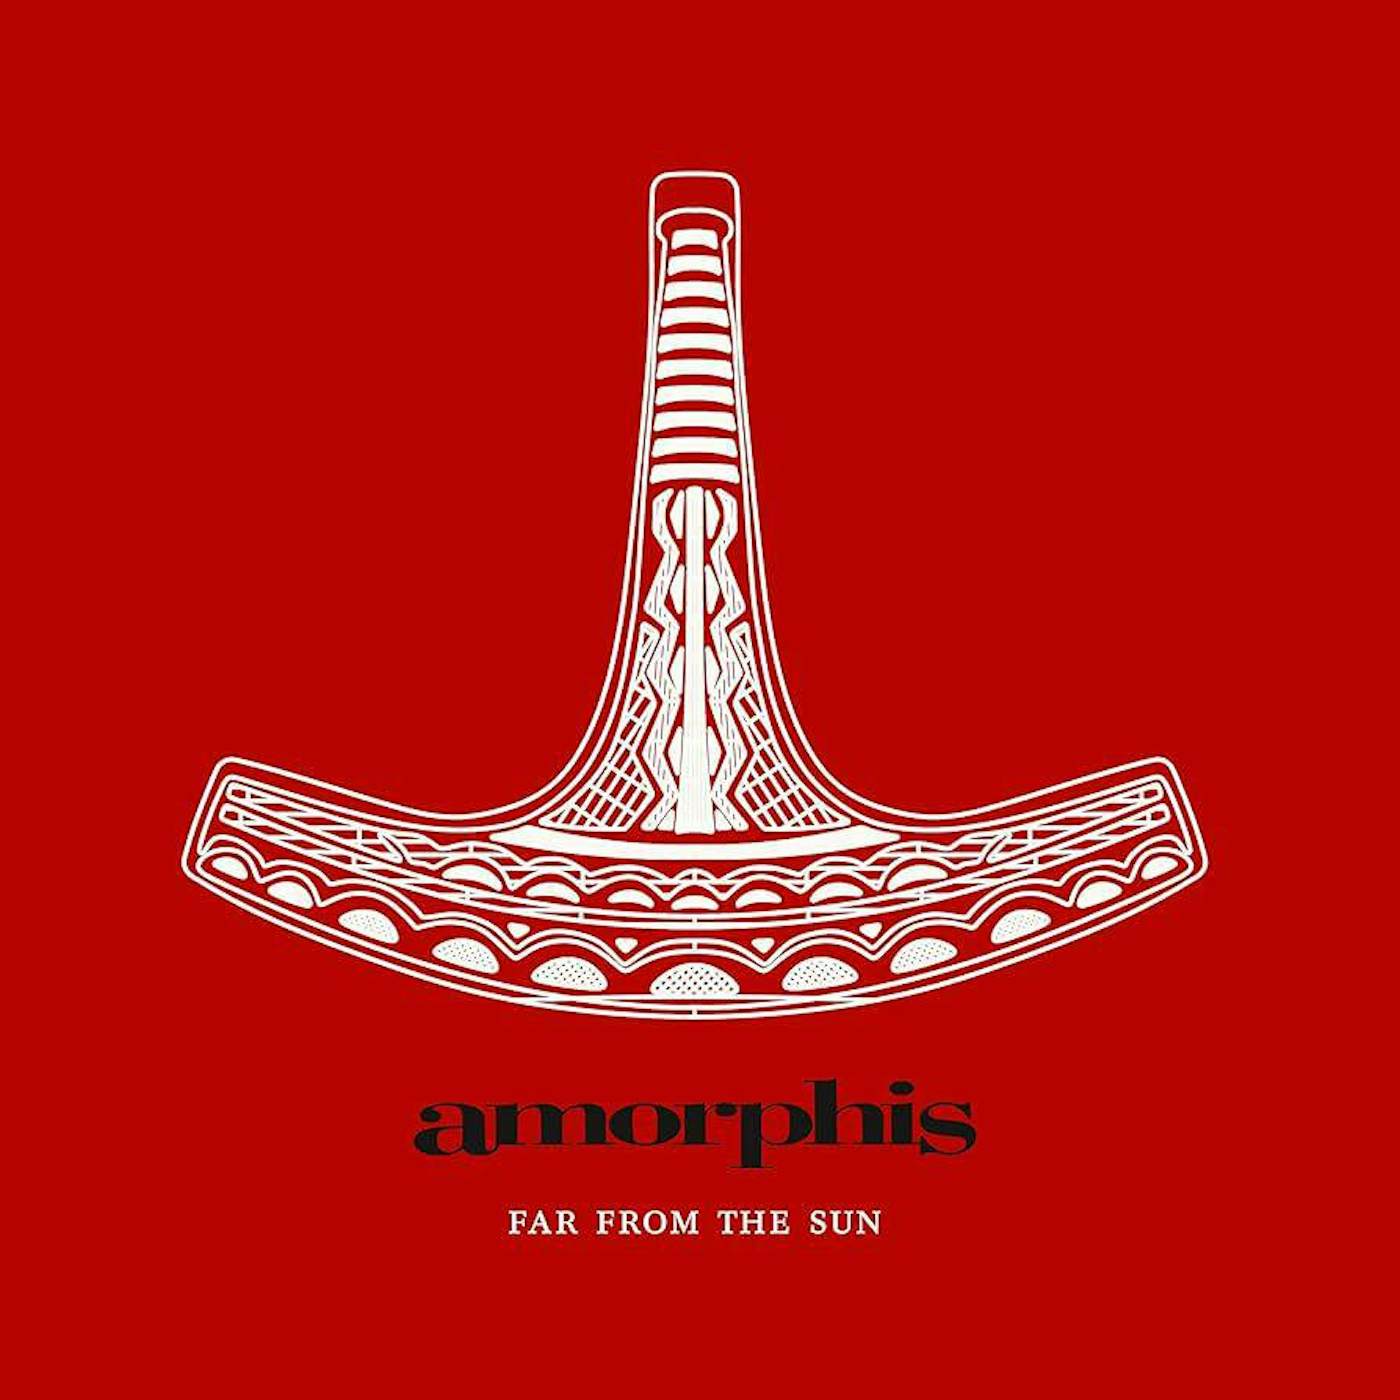 Amorphis Far From The Sun Vinyl Record